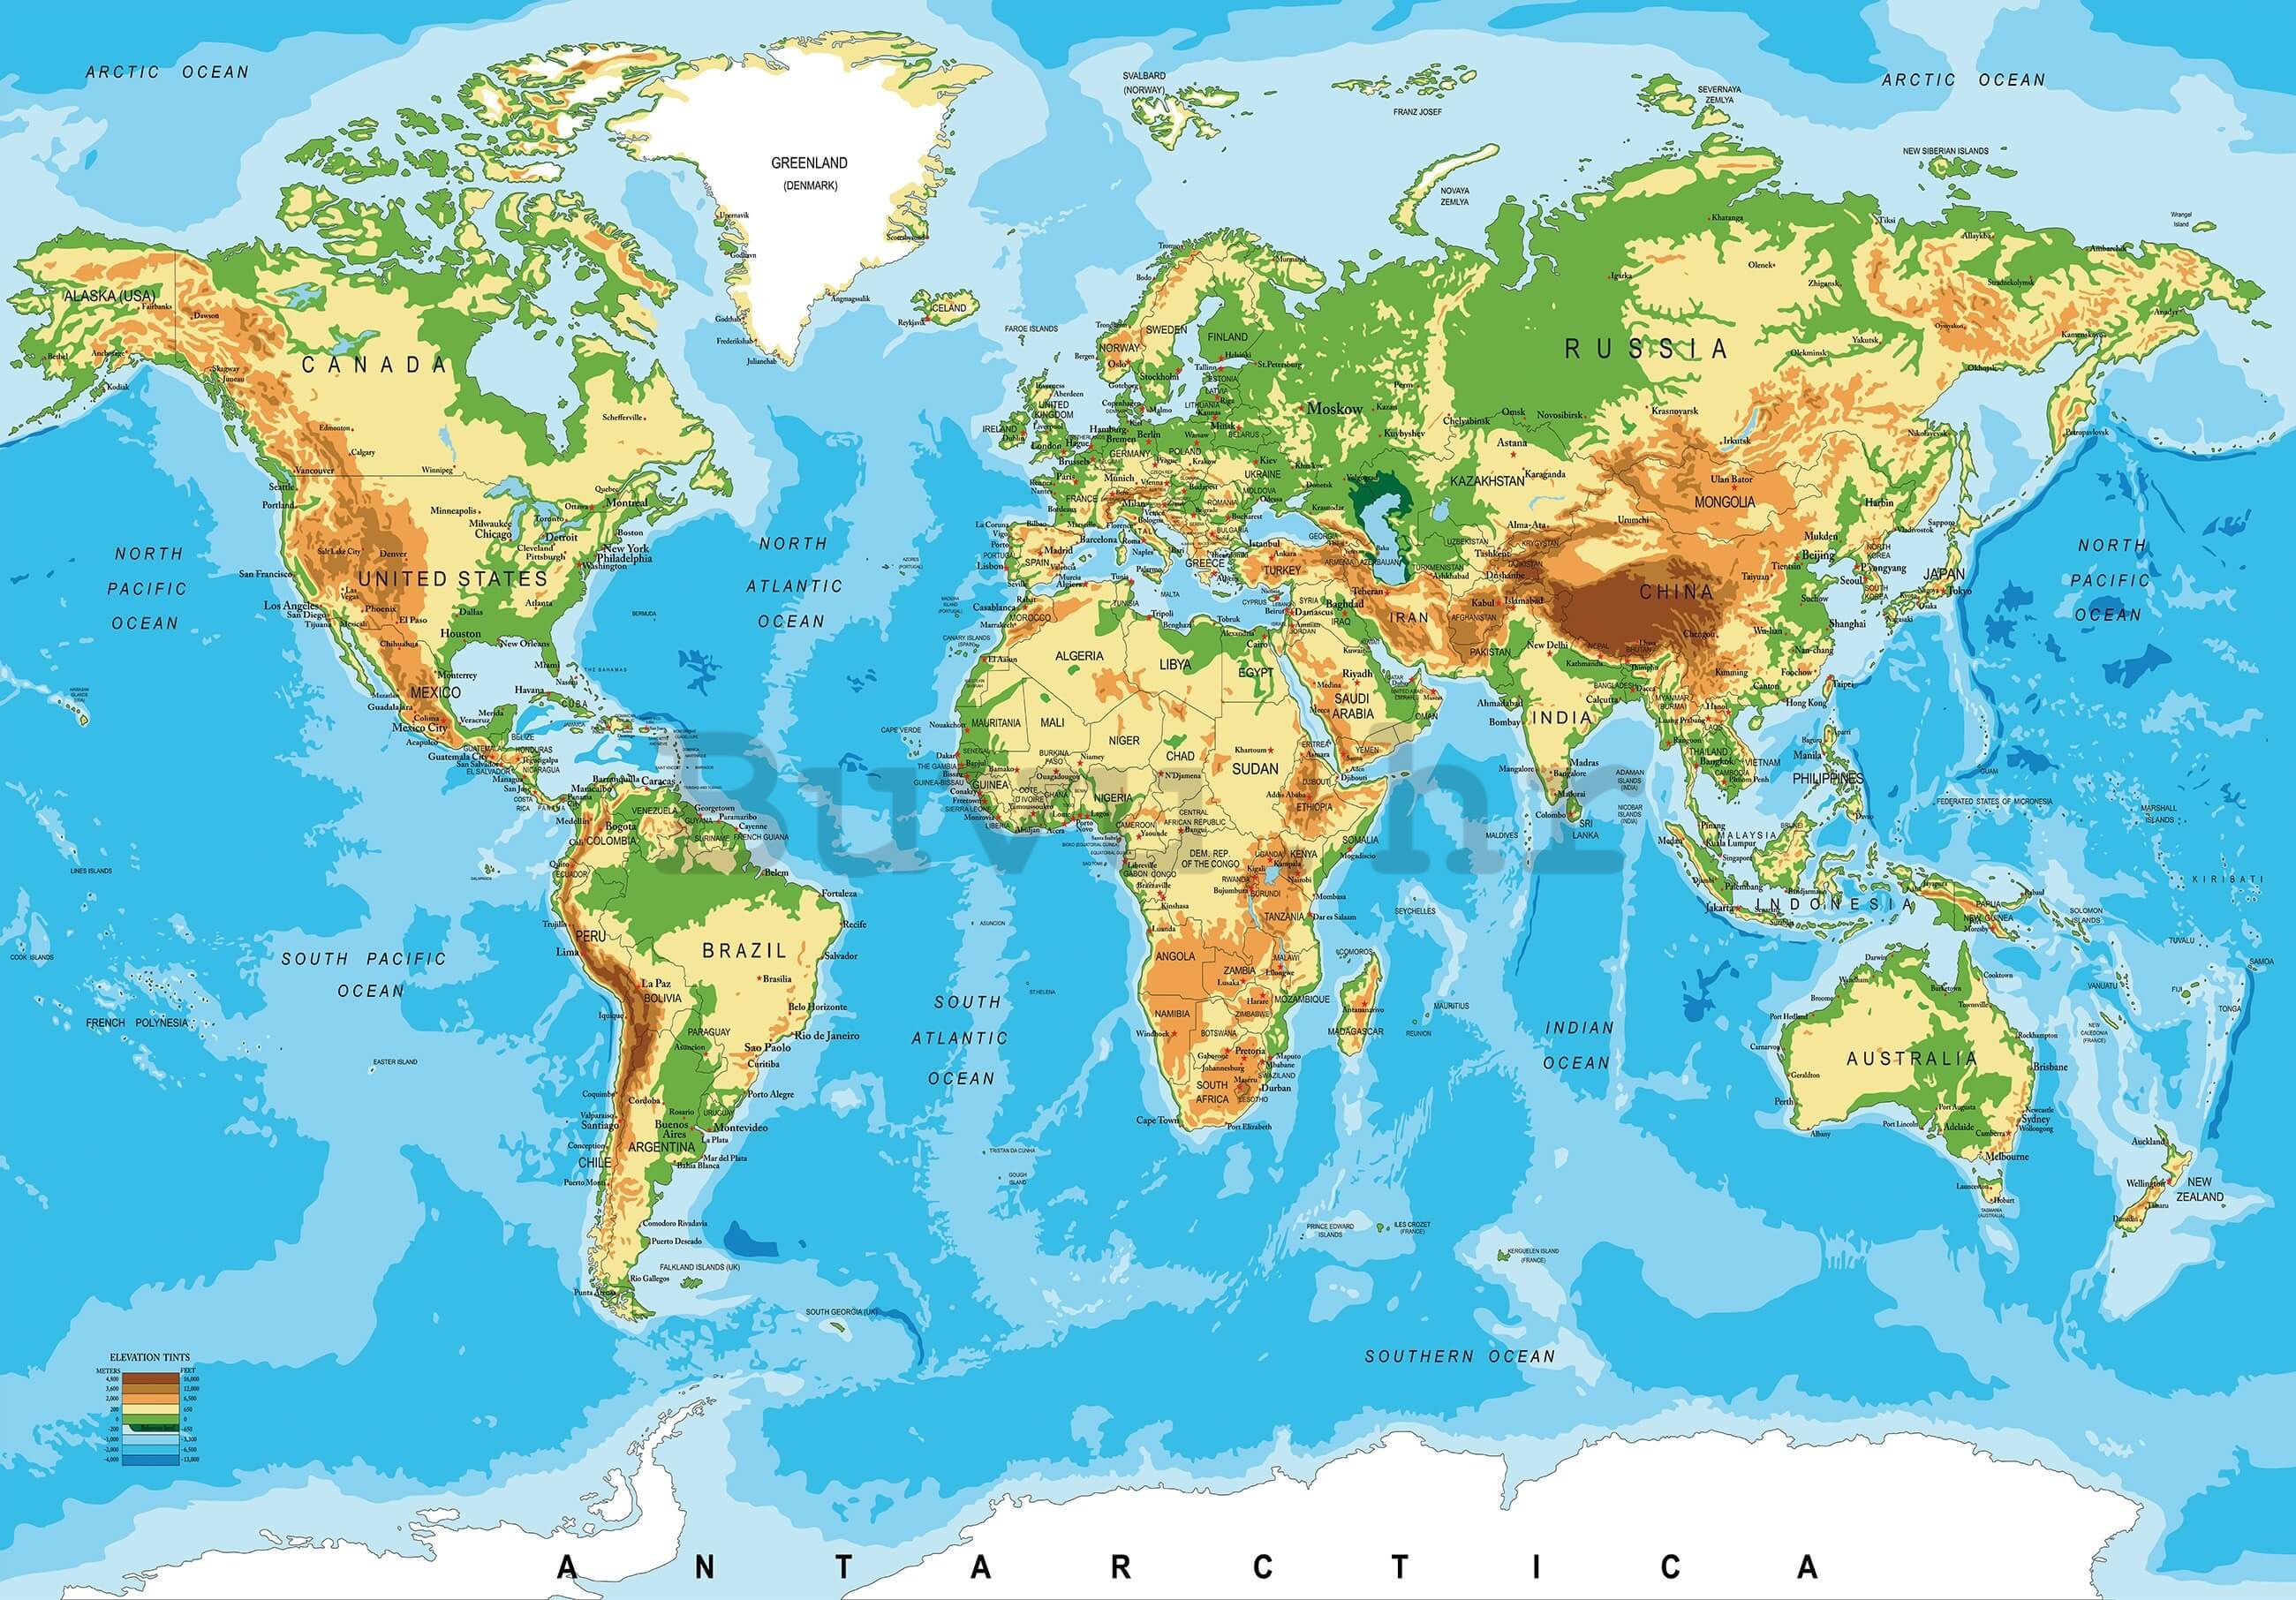 Vlies foto tapeta: Klasična karta svijeta - 152,5x104 cm